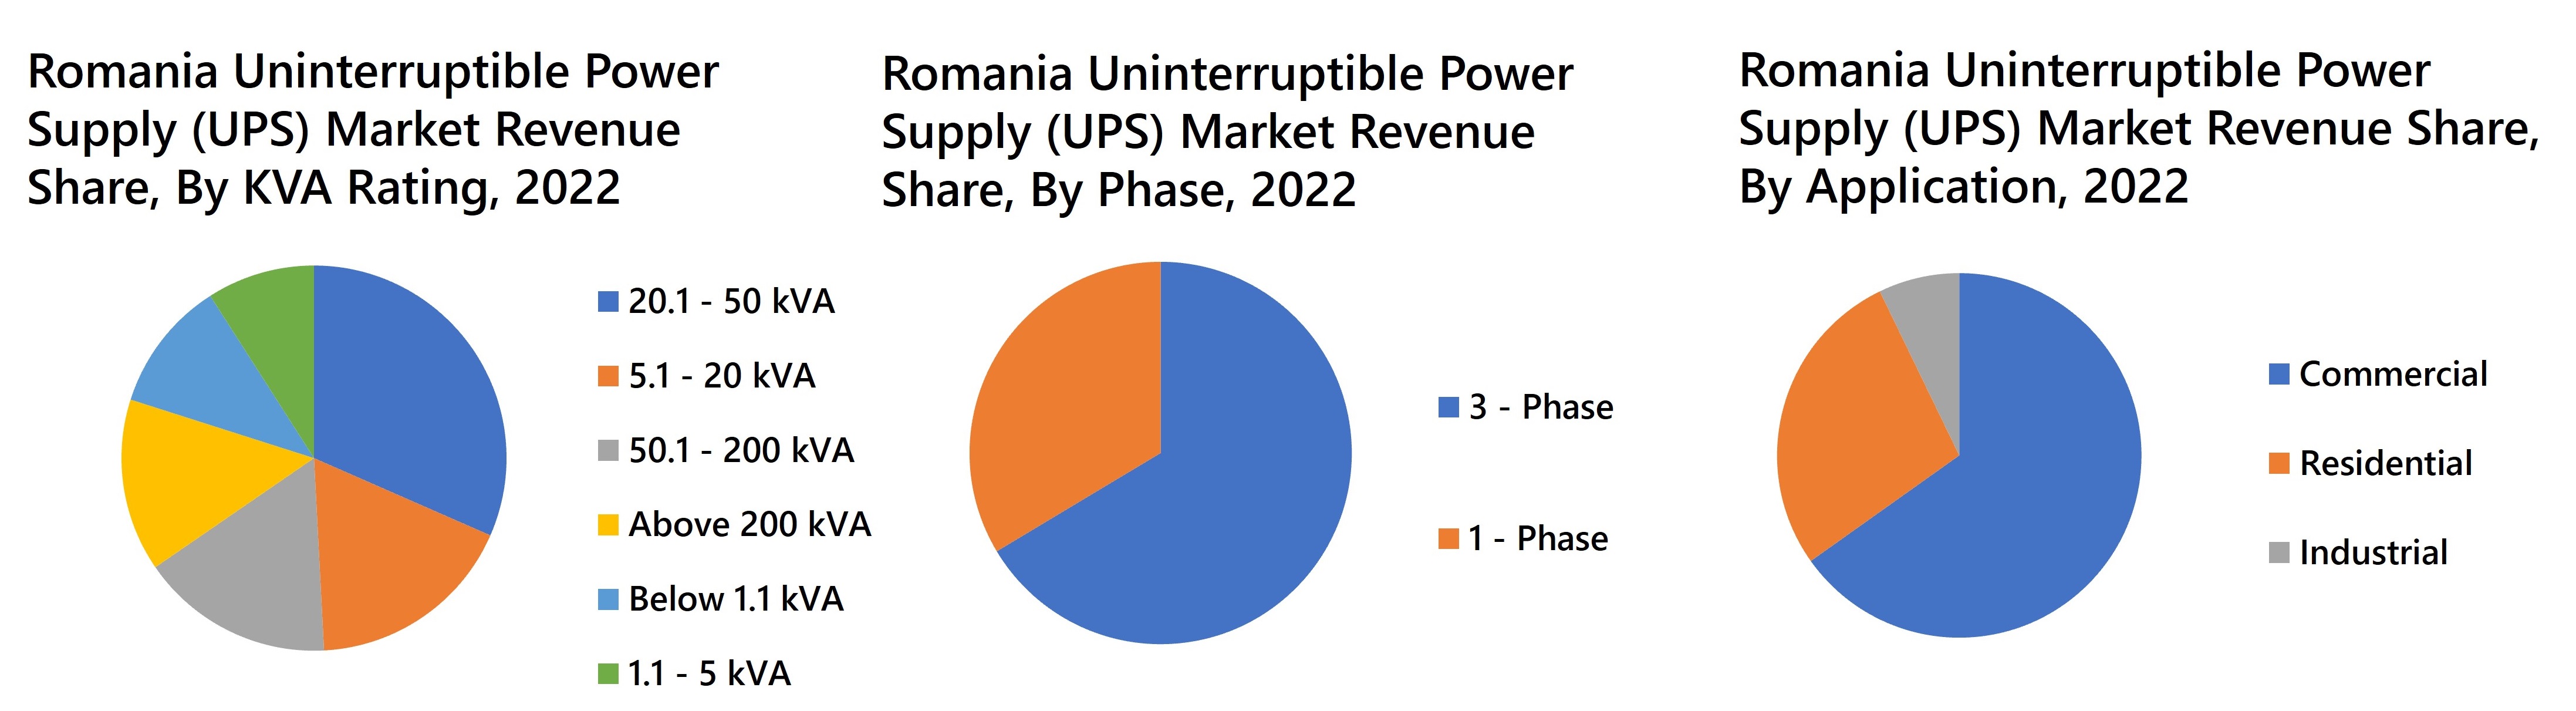 Romania Uninterruptible Power Supply (UPS) Market Revenue Share